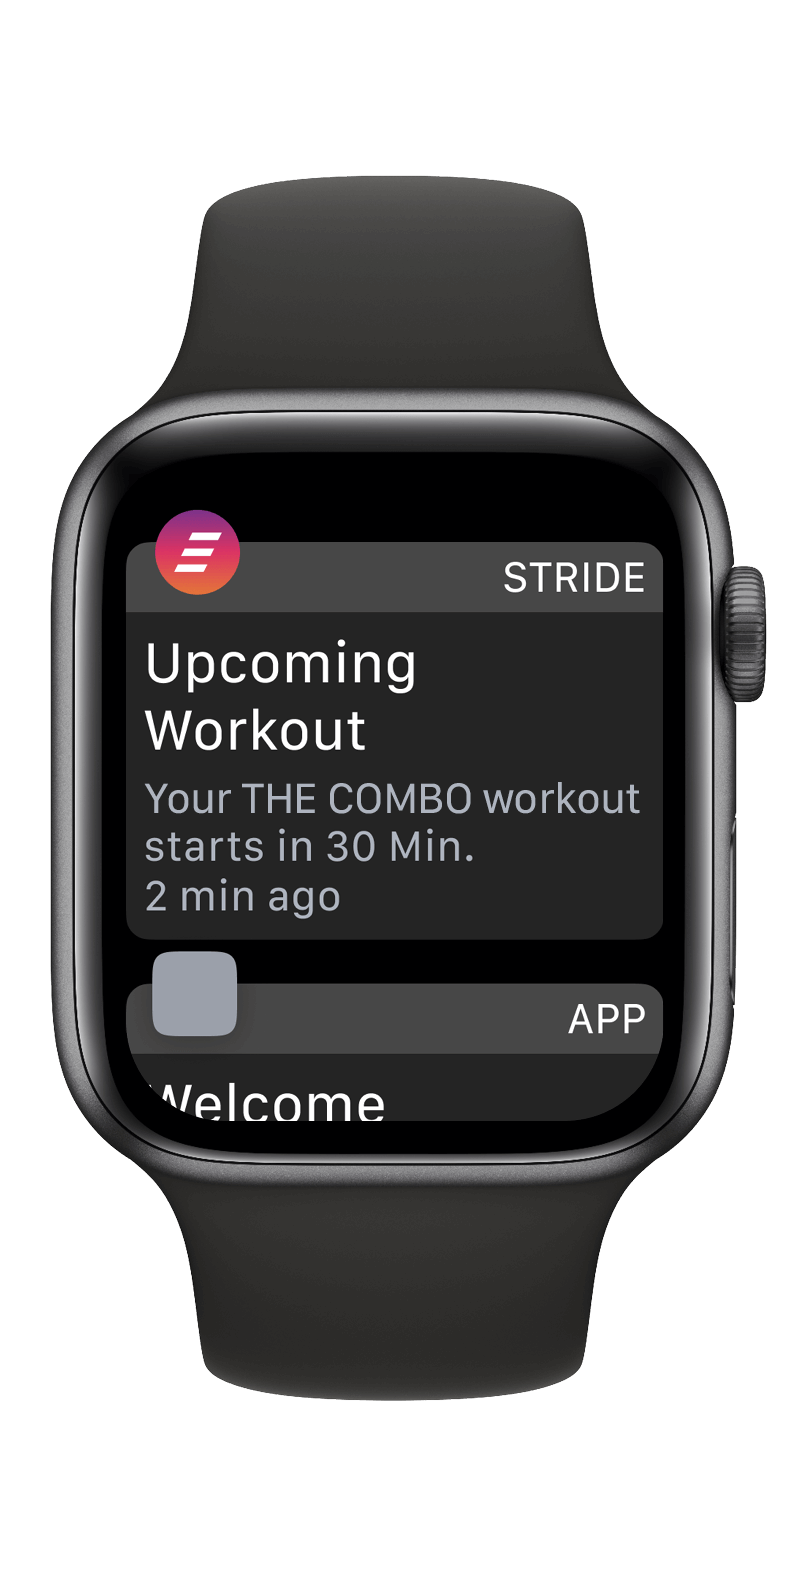 Apple watch displaying upcoming workout